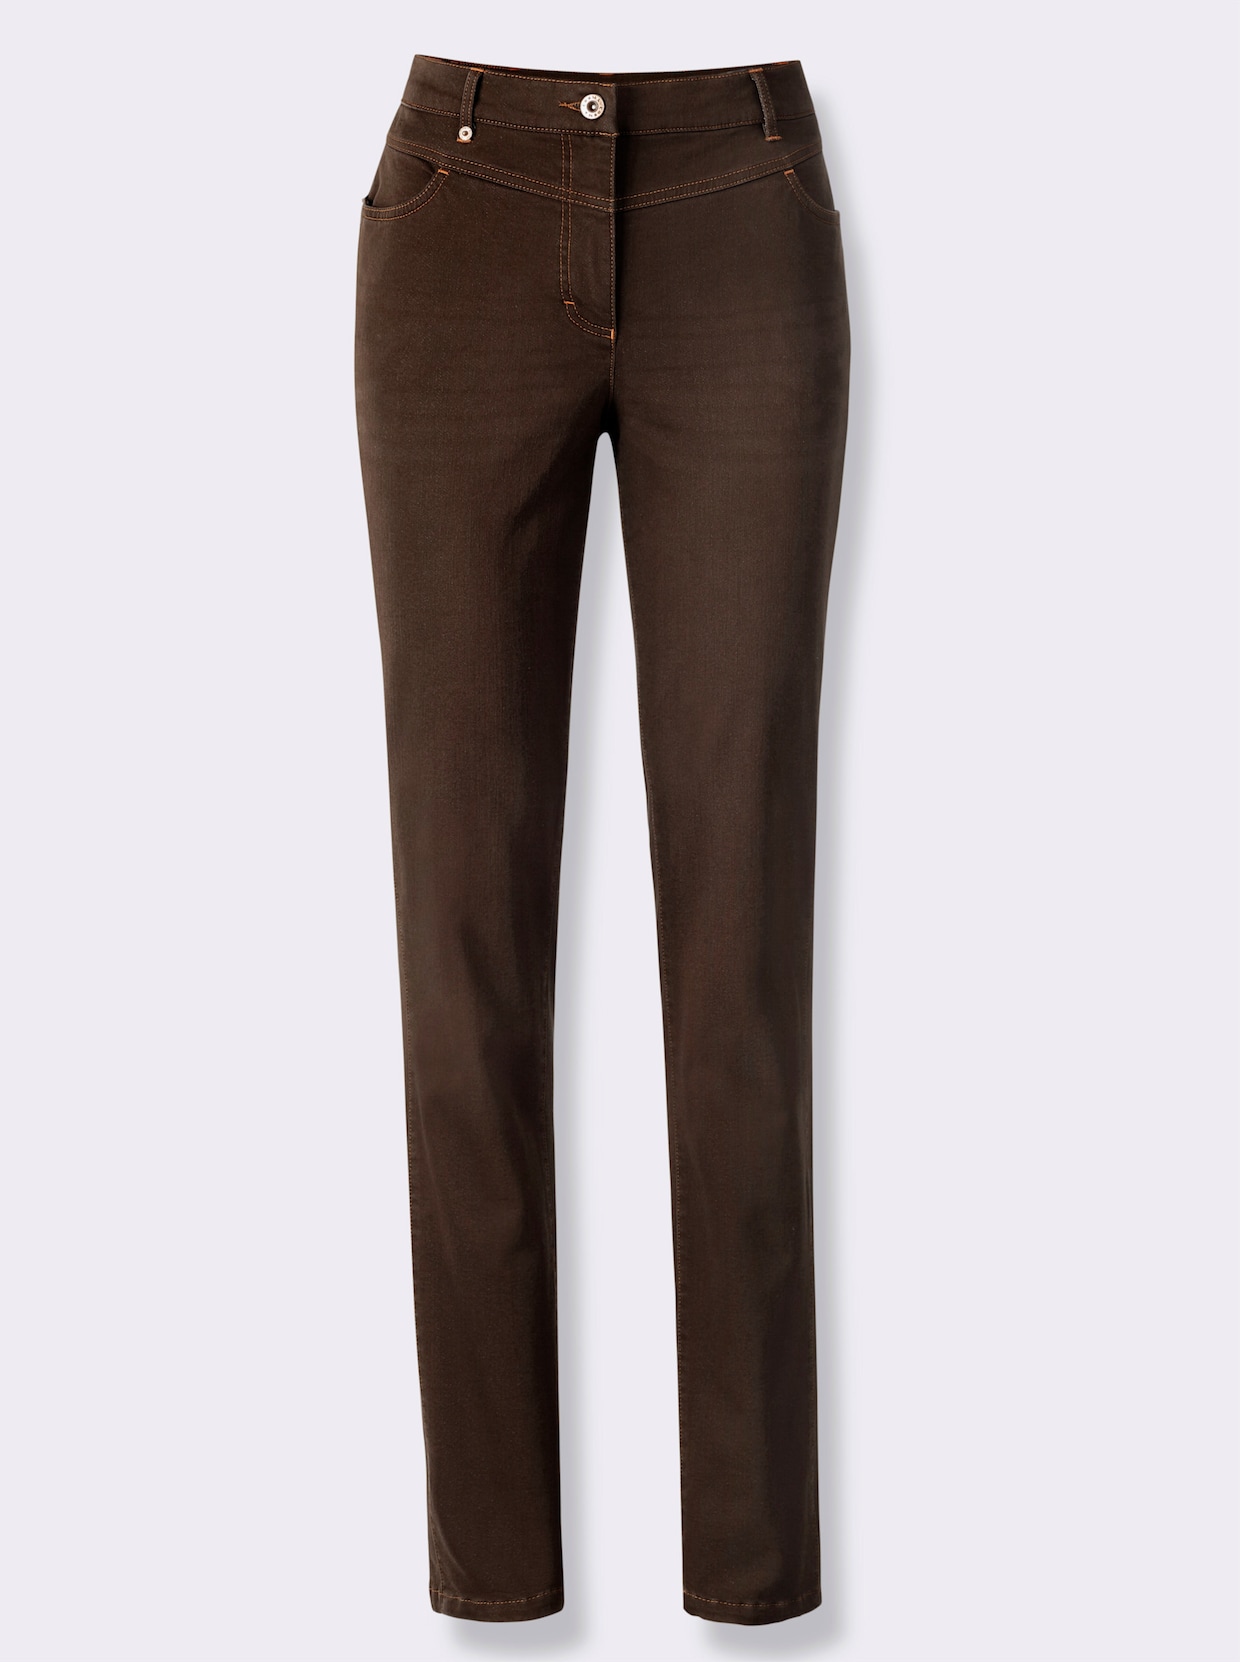 Cosma Jeans - brown-denim